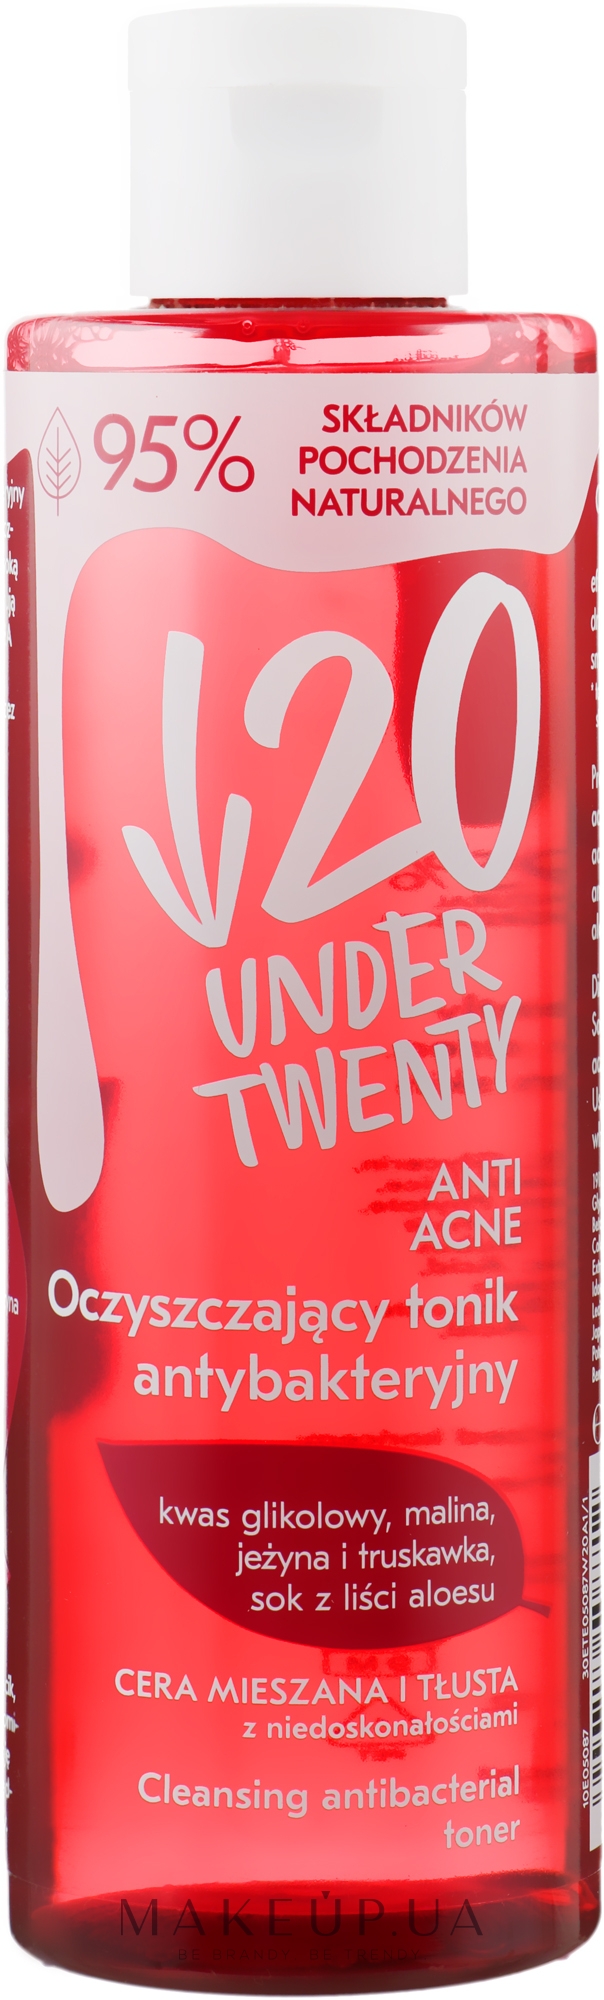 Очищающий тоник для лица - Under Twenty Anti Acne! Active Detoxifying Tonic — фото 200ml